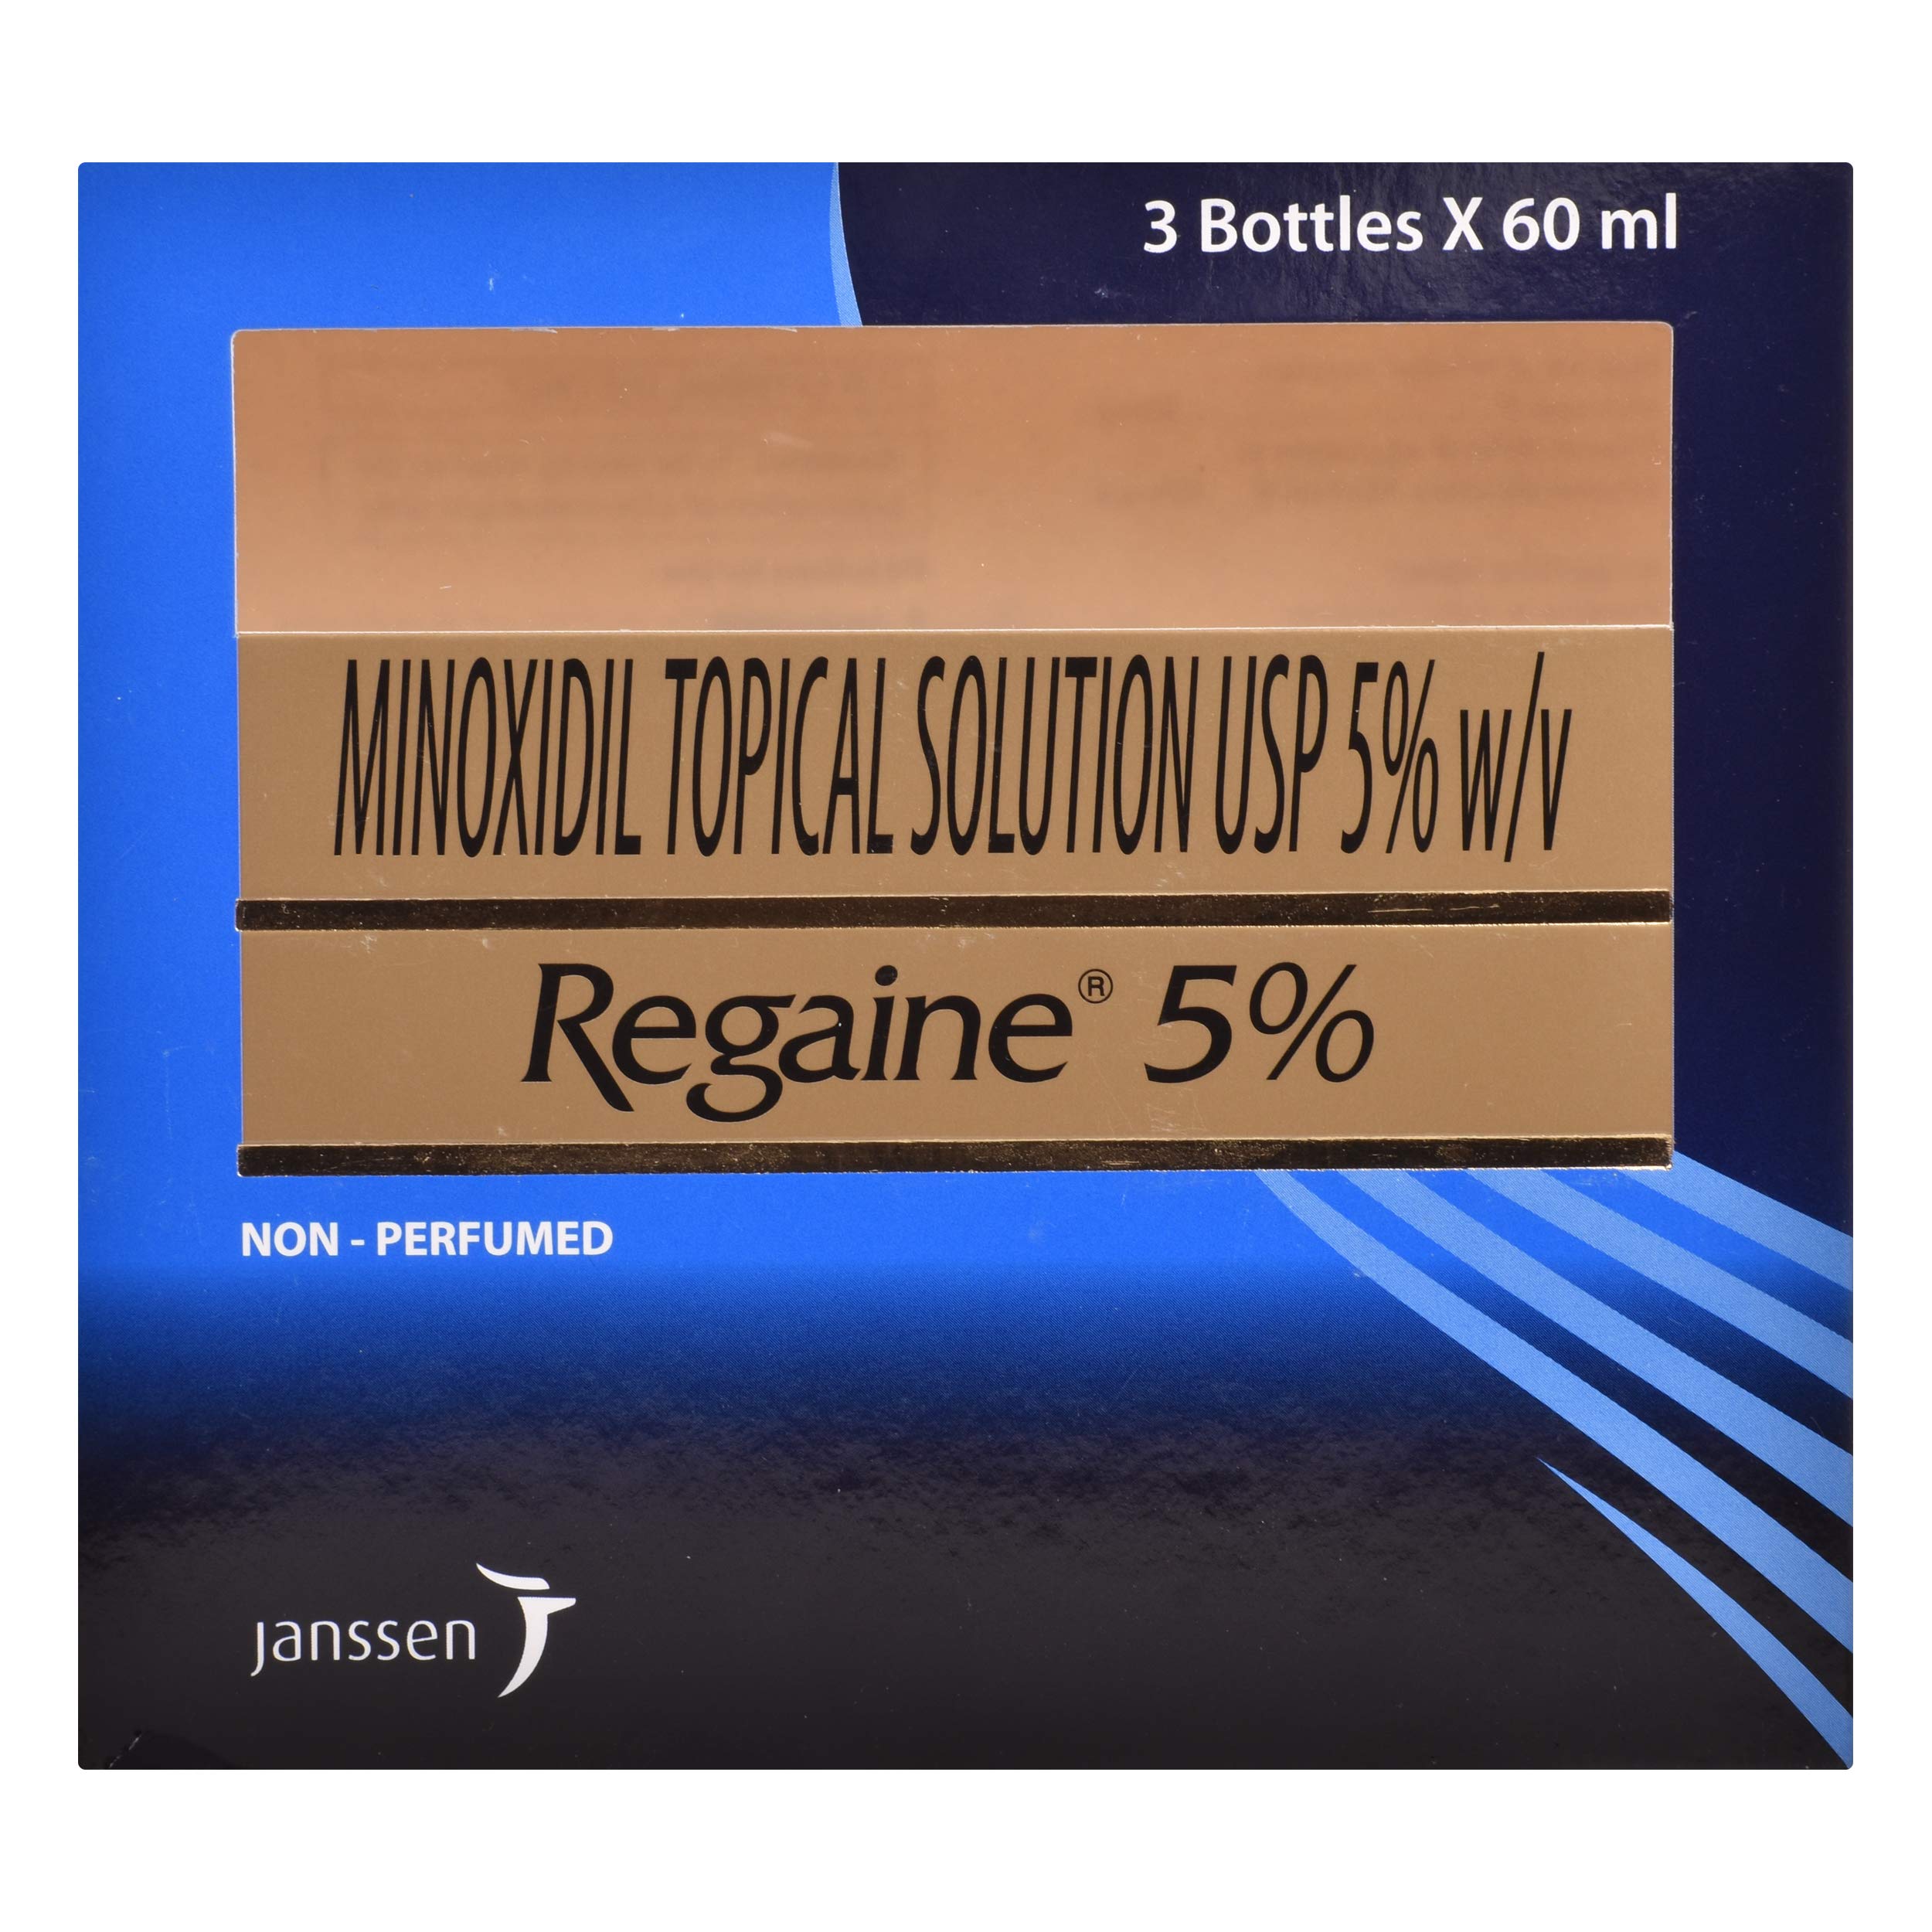 regaine-5-solution-3-bottles